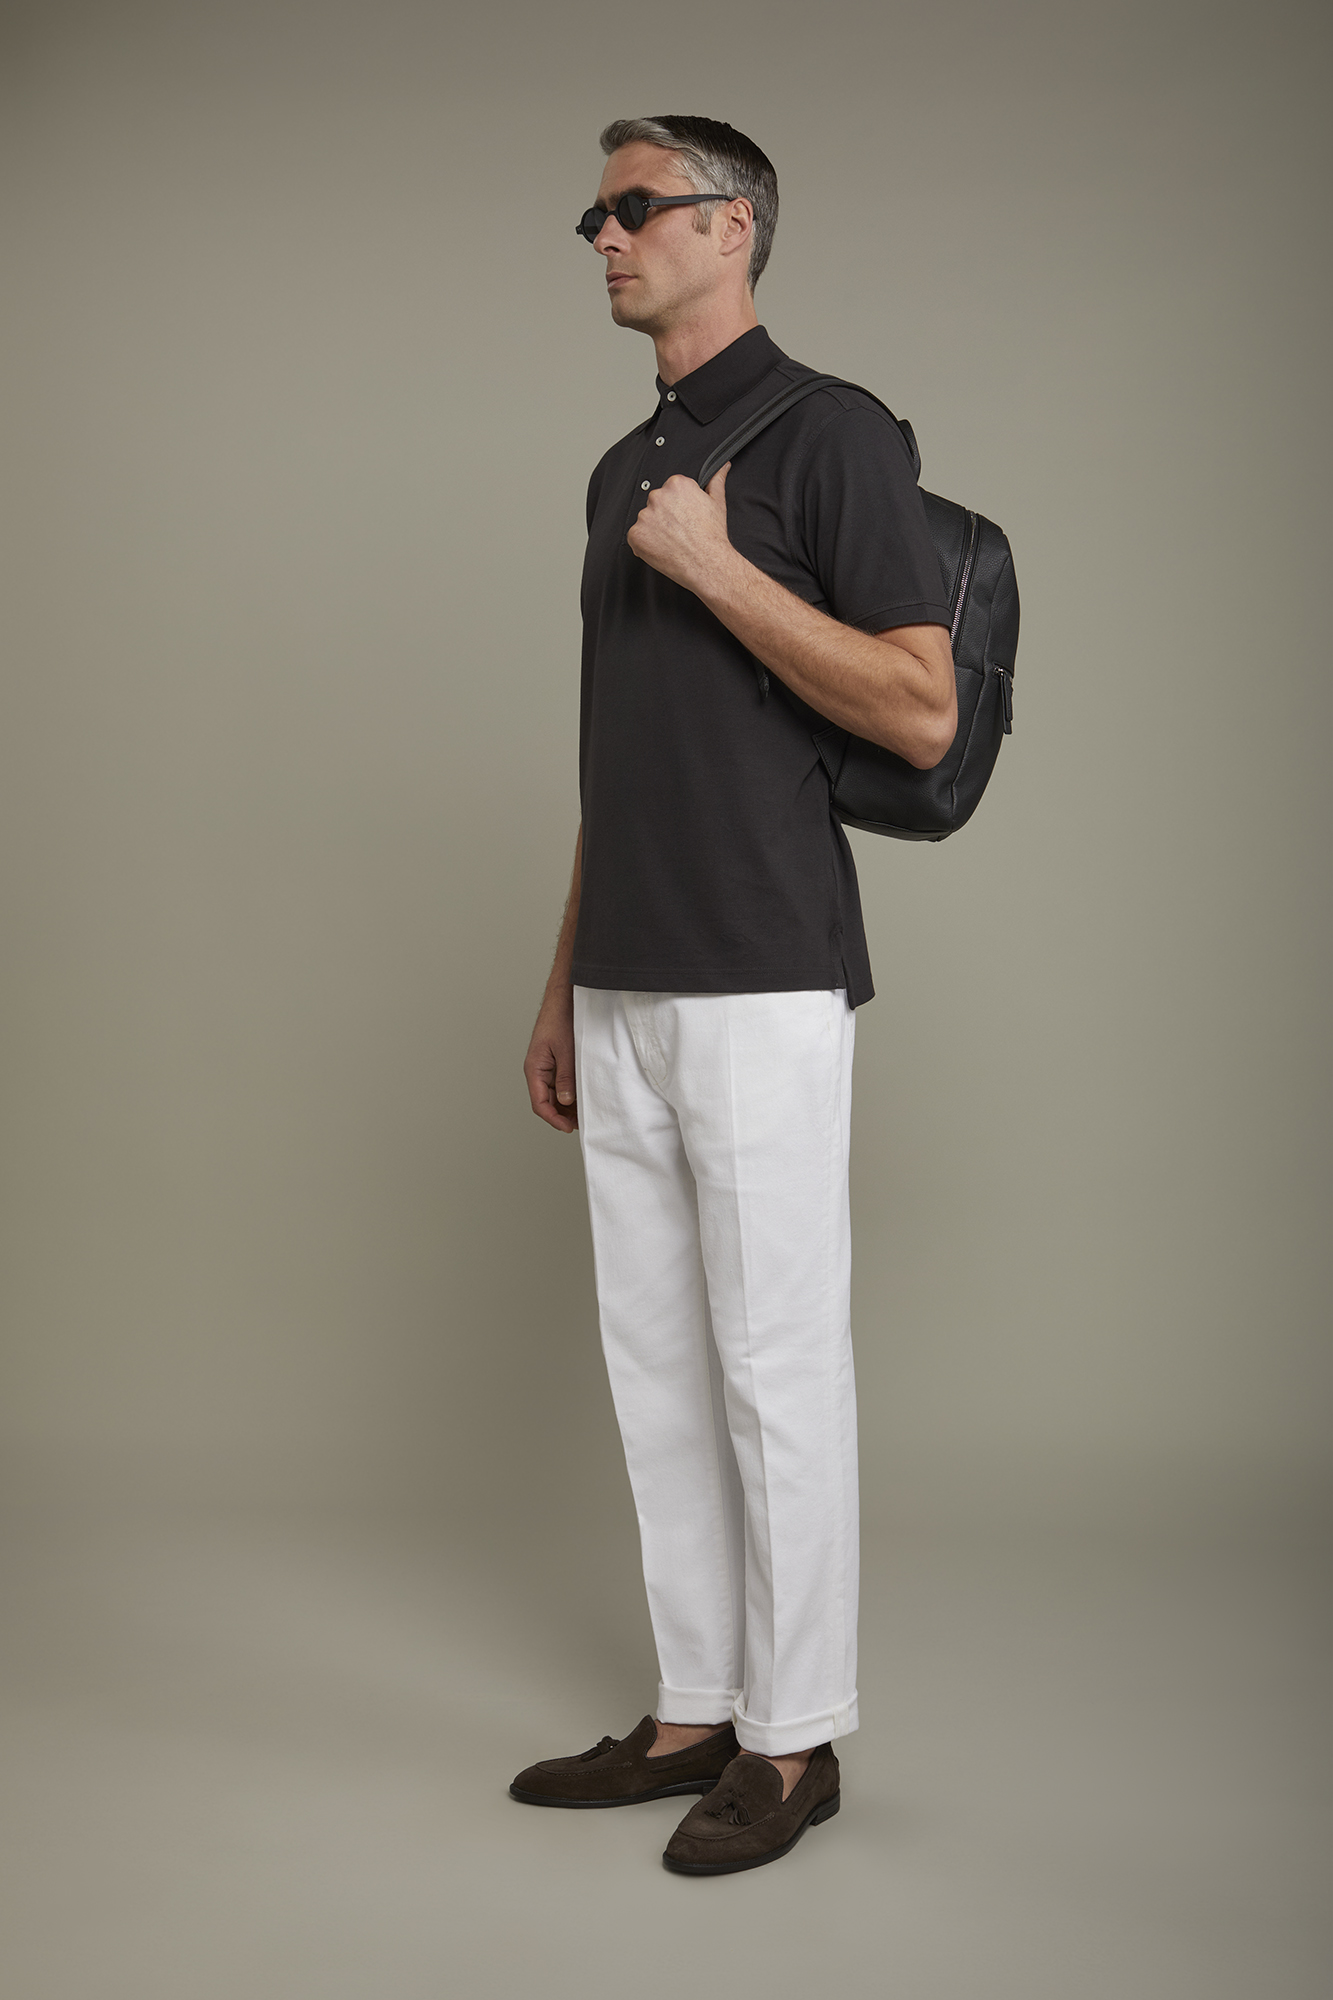 Men’s short sleeve polo shirt 100% piquet cotton regular fit image number null